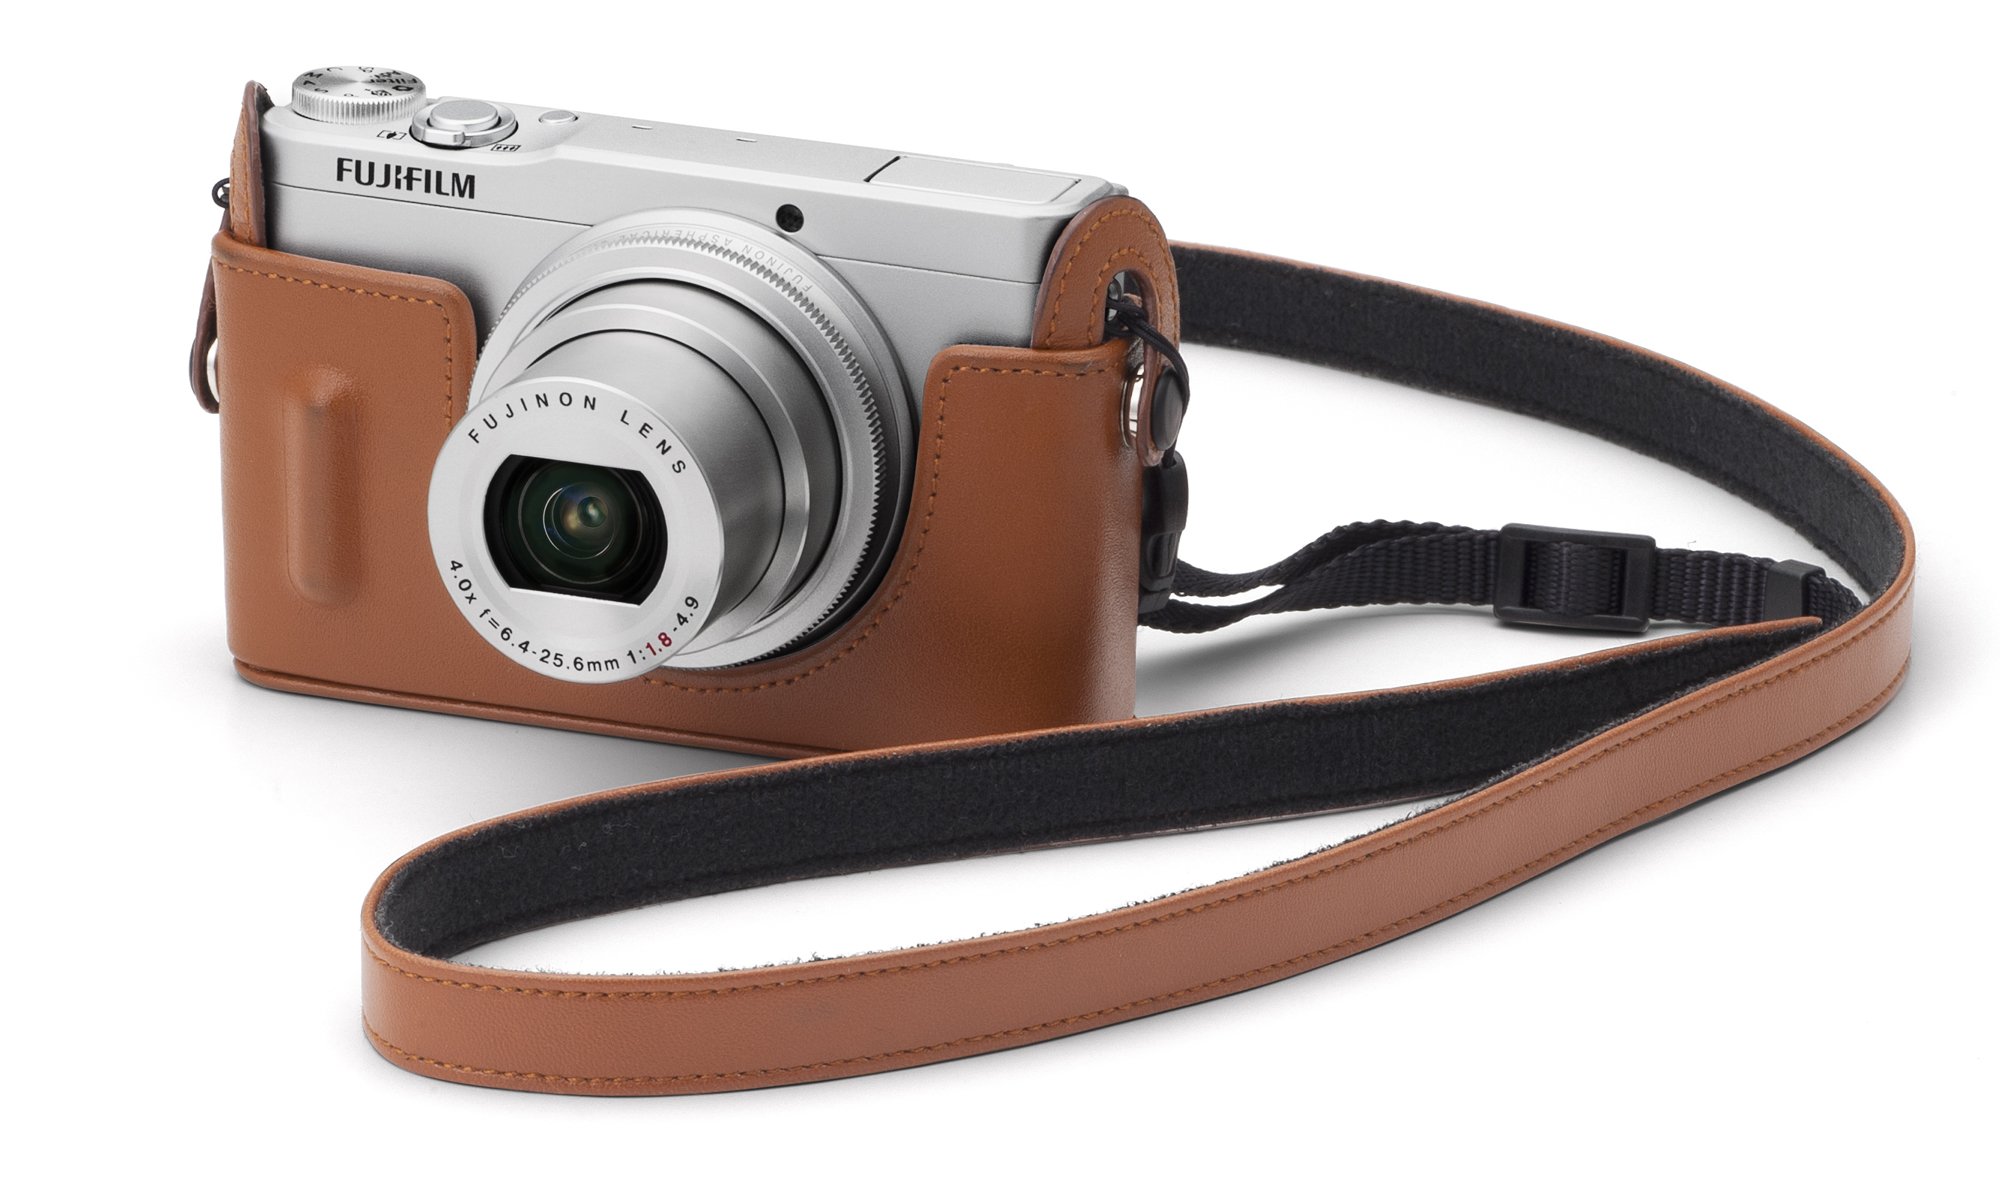 Fujifilm XQ1 12MP Digital Camera with 3.0-Inch LCD (Silver)